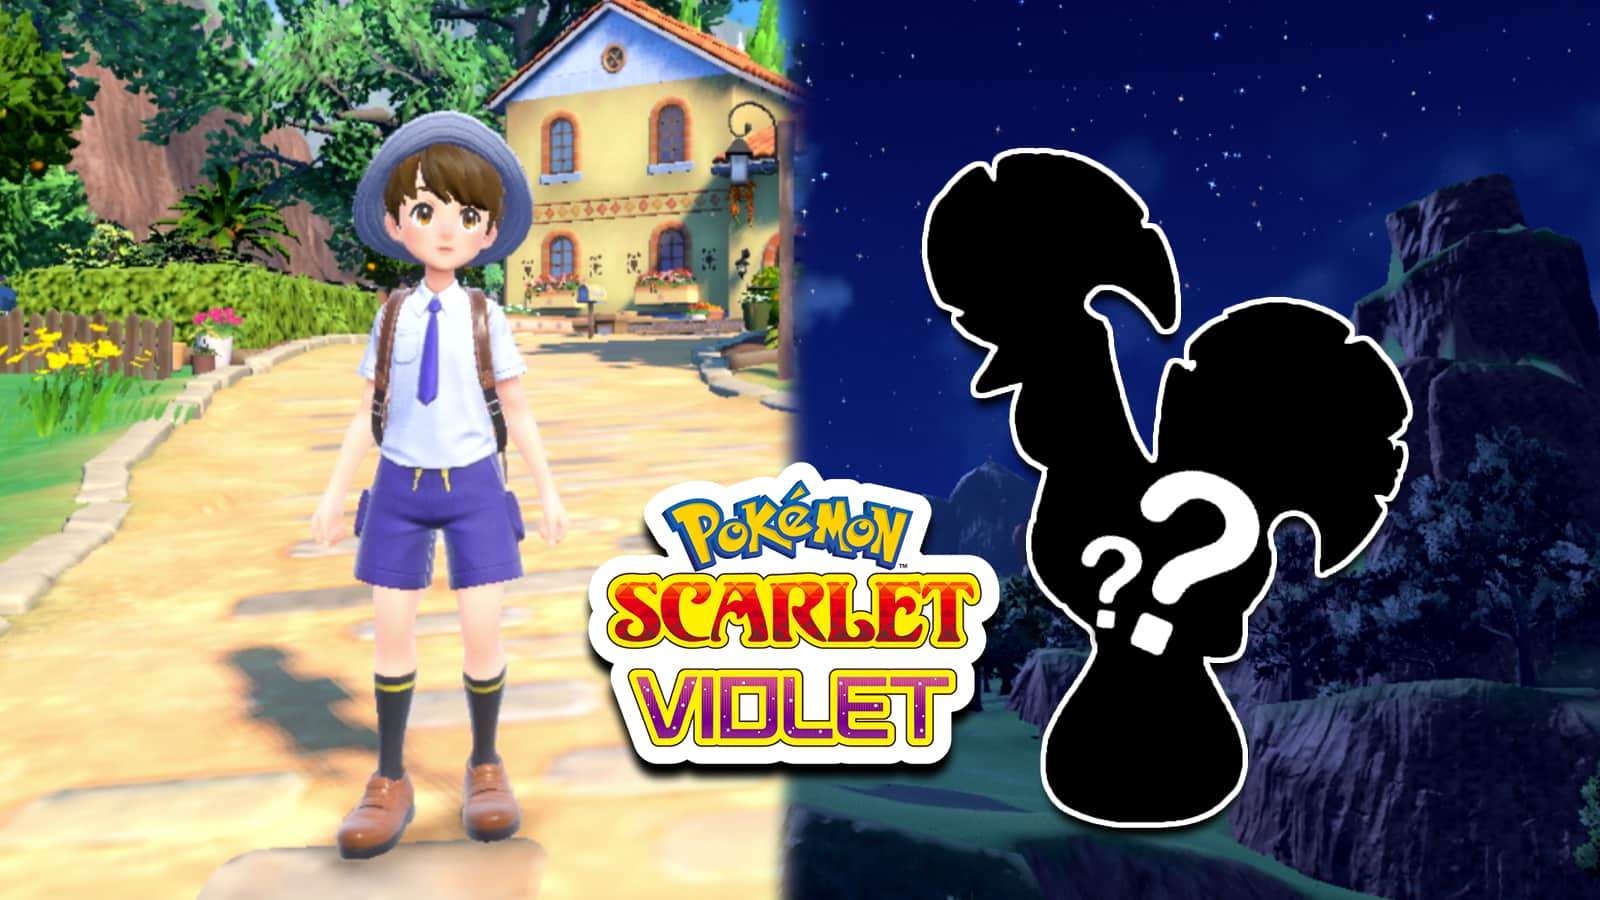 Pokemon Scarlet & Violet protagonist next to New Pokemon silhouette screenshot.